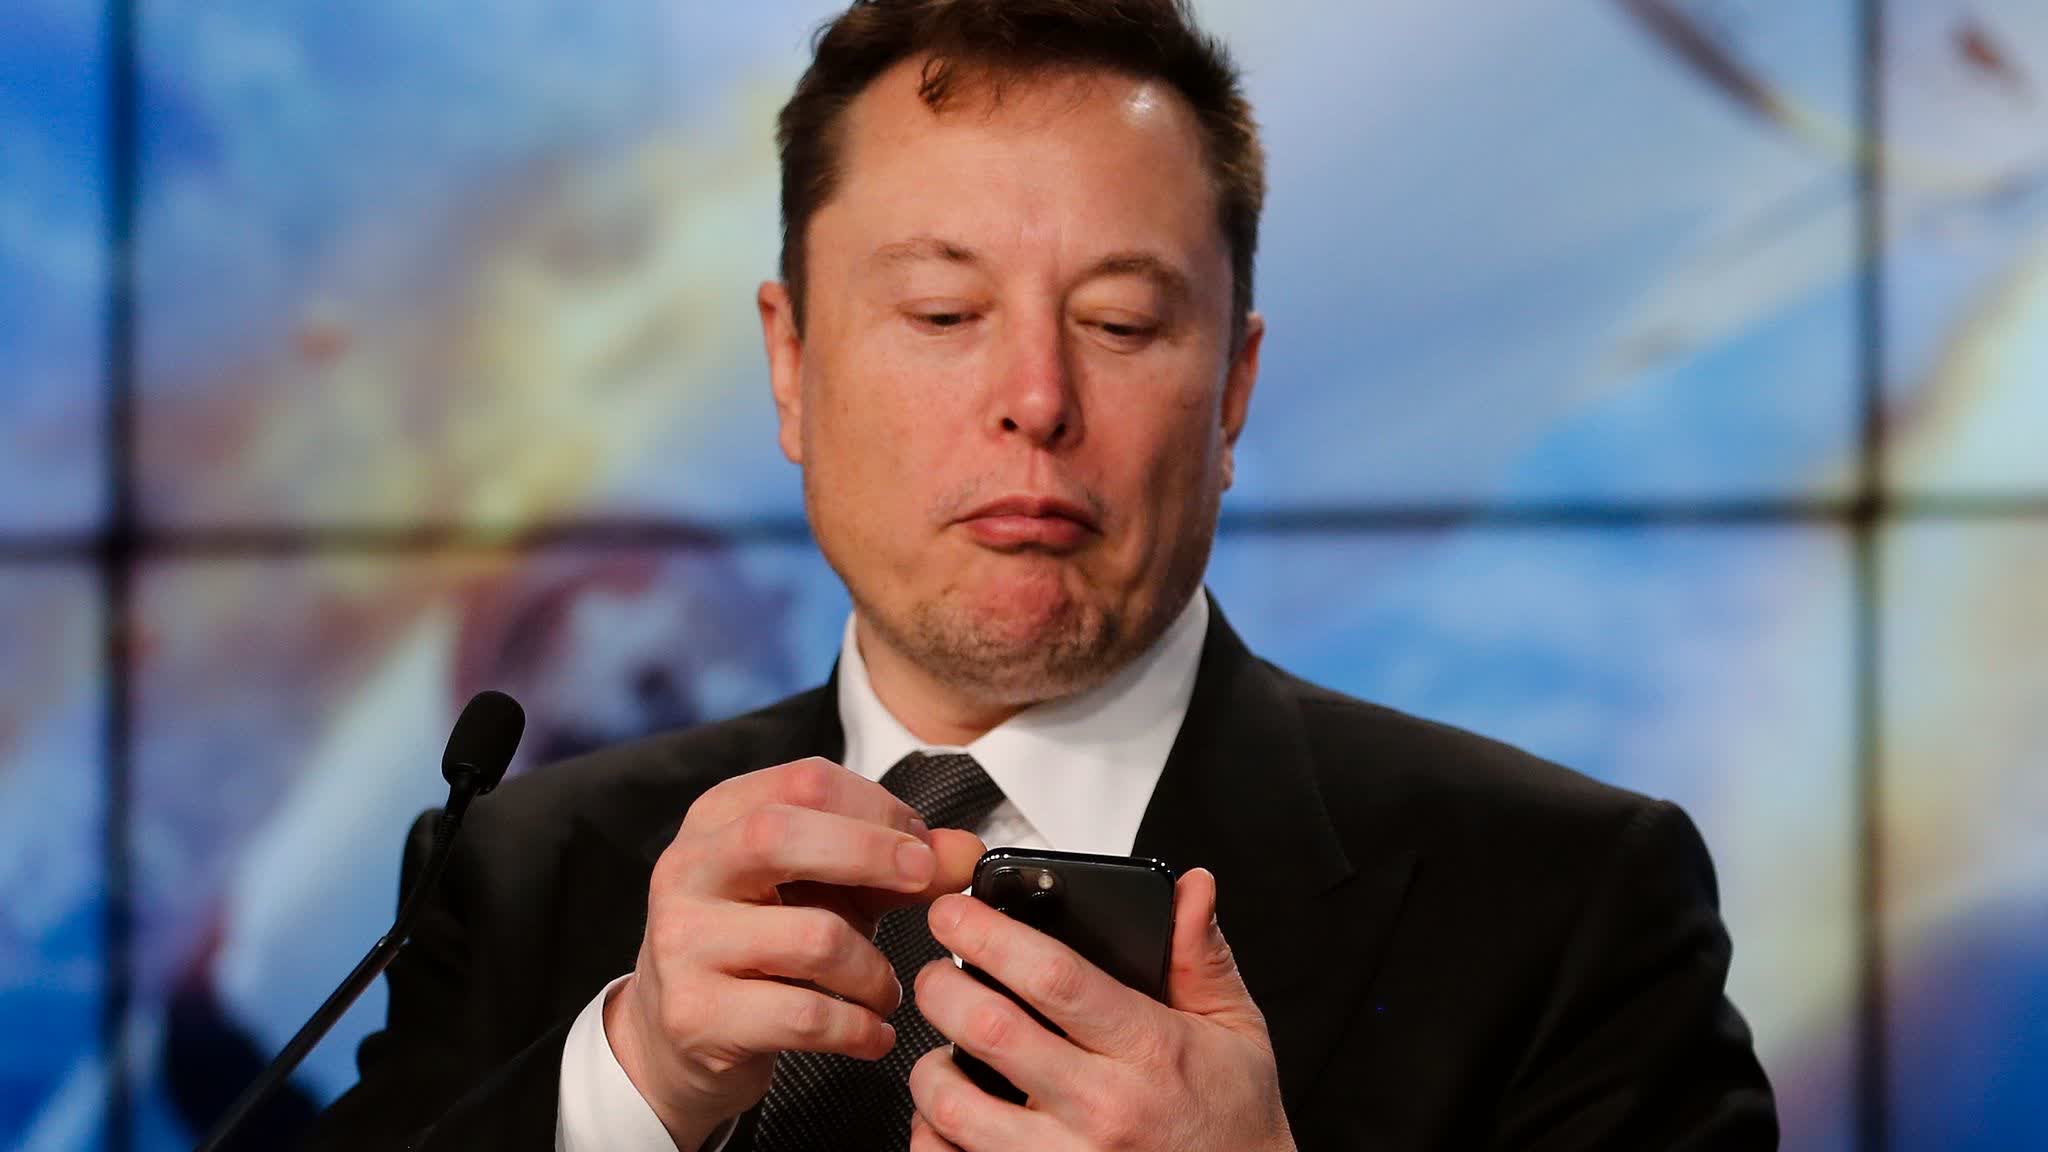 Elon Musk addresses Twitter meme amid sexual harassment allegations